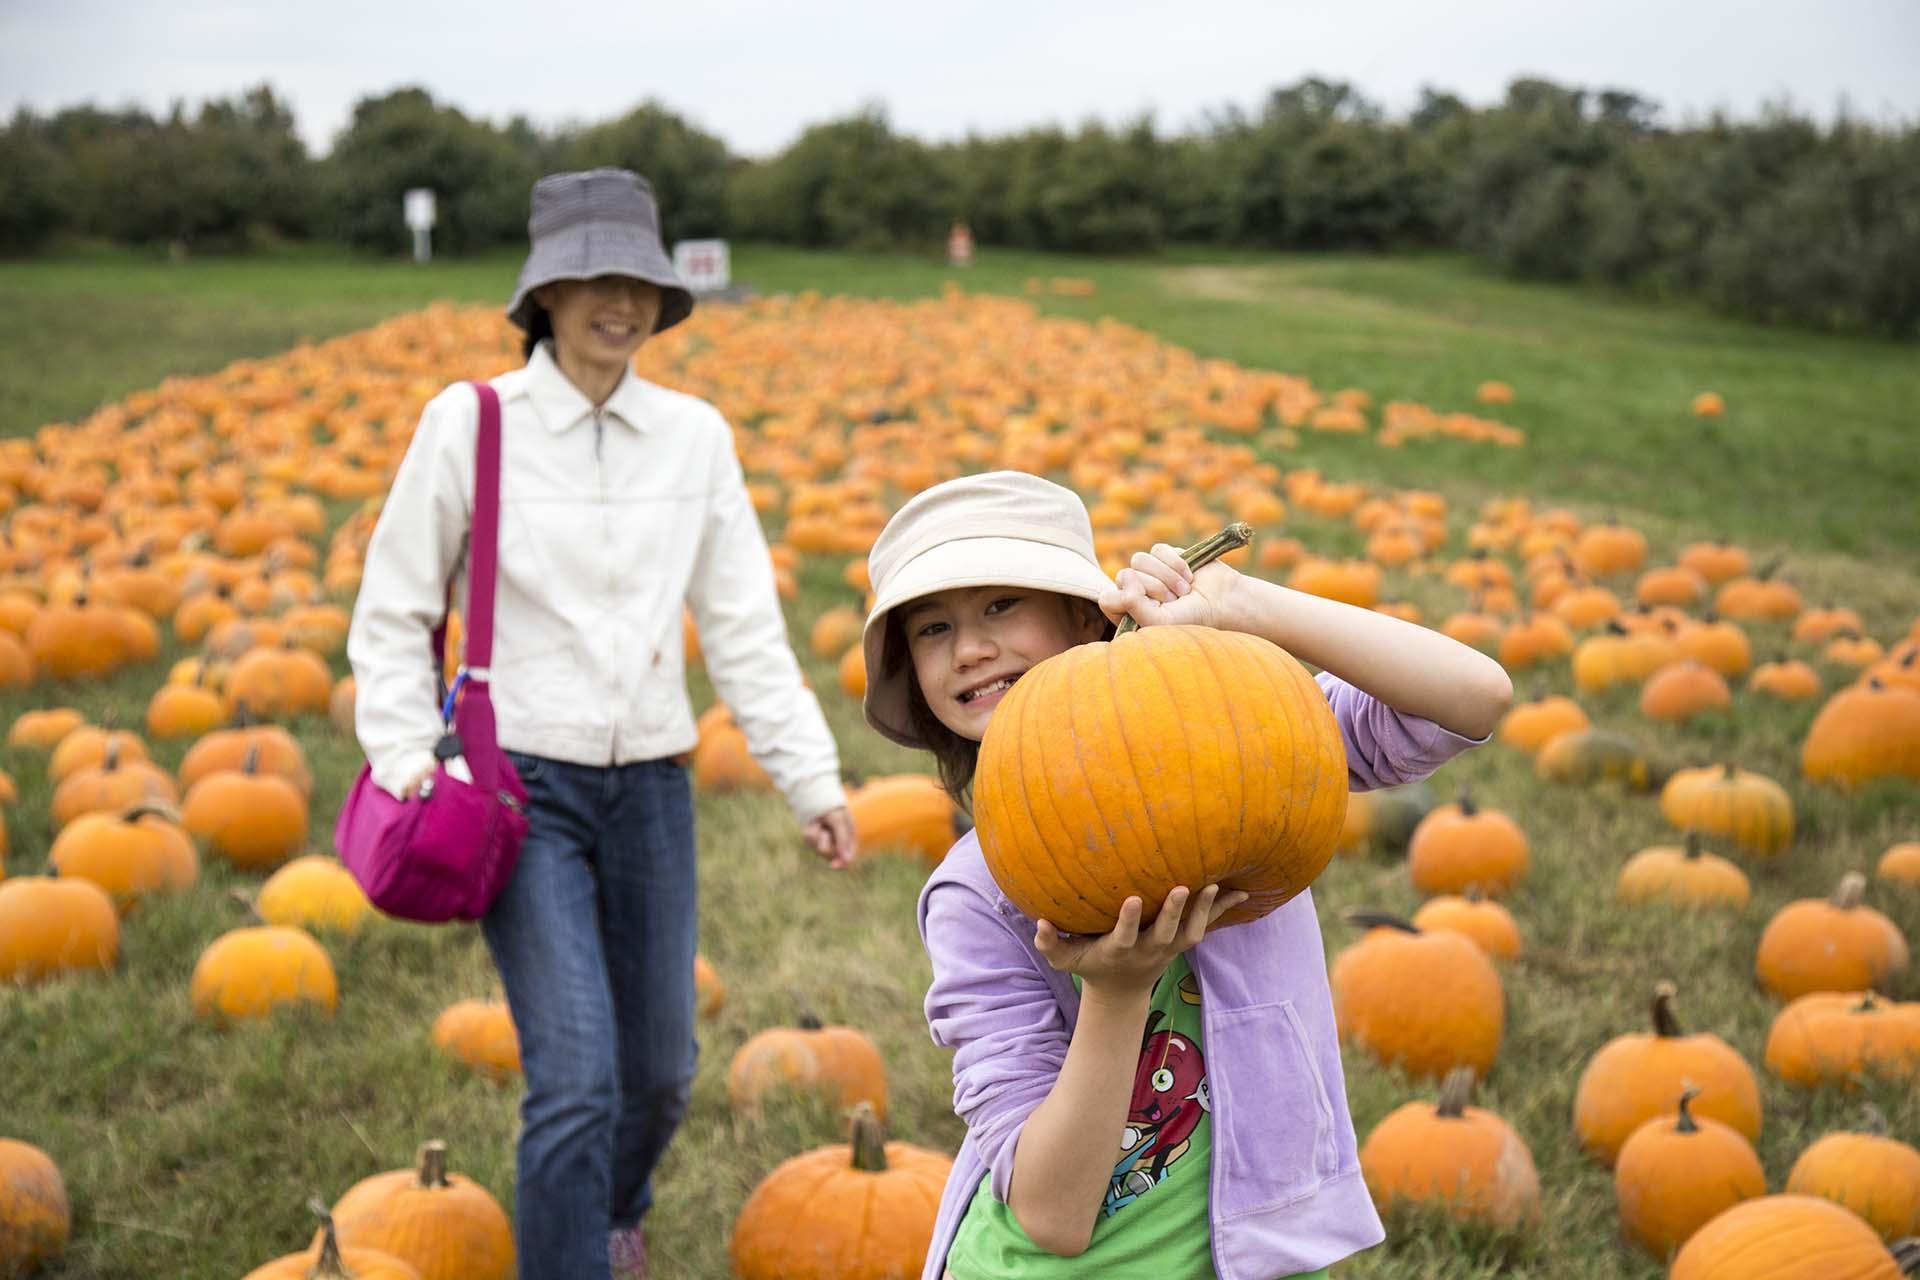 A child holding a pumpkin in a pumpkin patch.